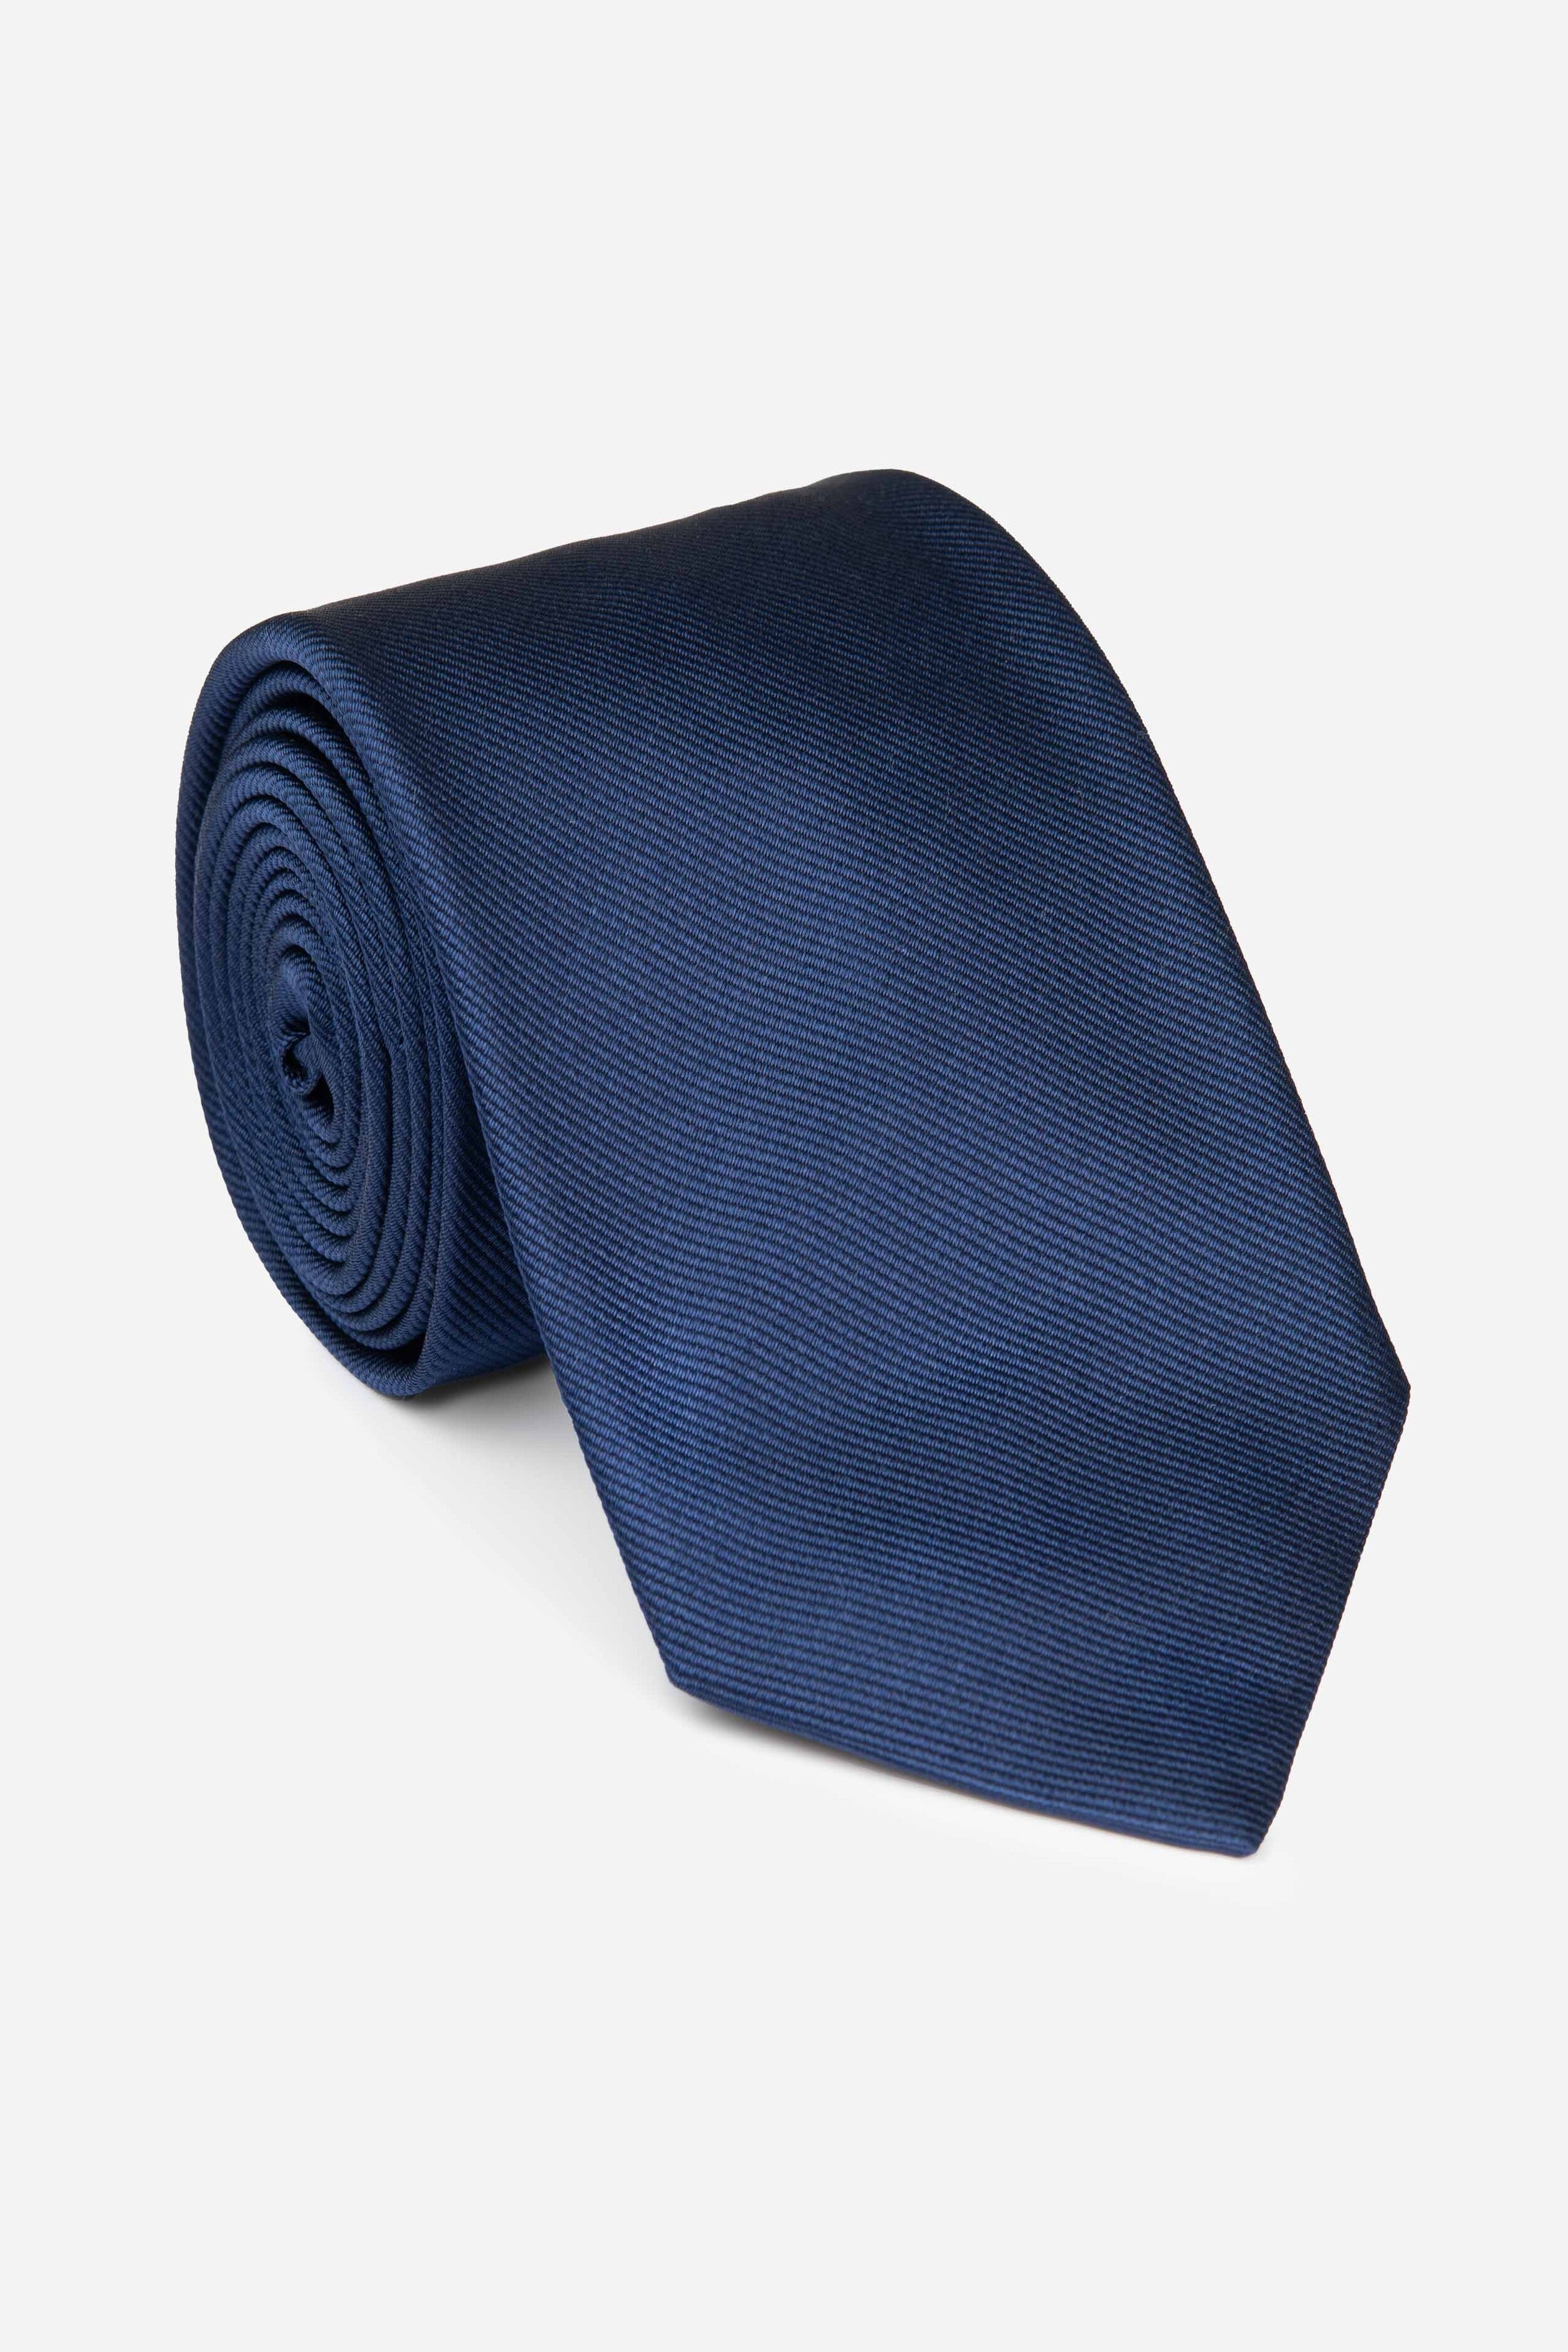 Cravatta in seta ottoman - BLU